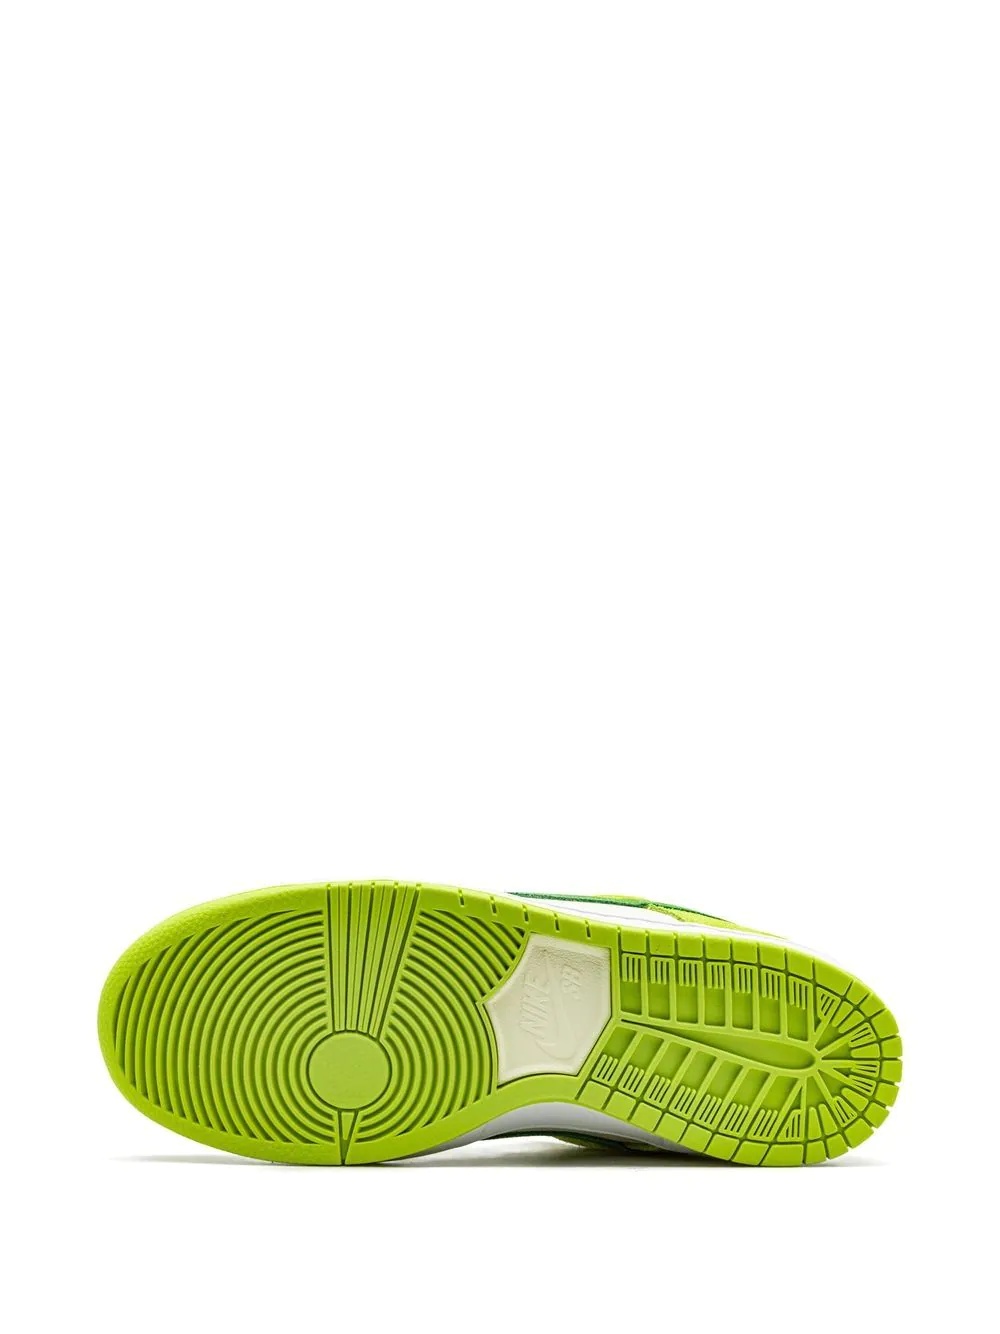 SB Dunk Low Pro "Green Apple" sneakers - 4